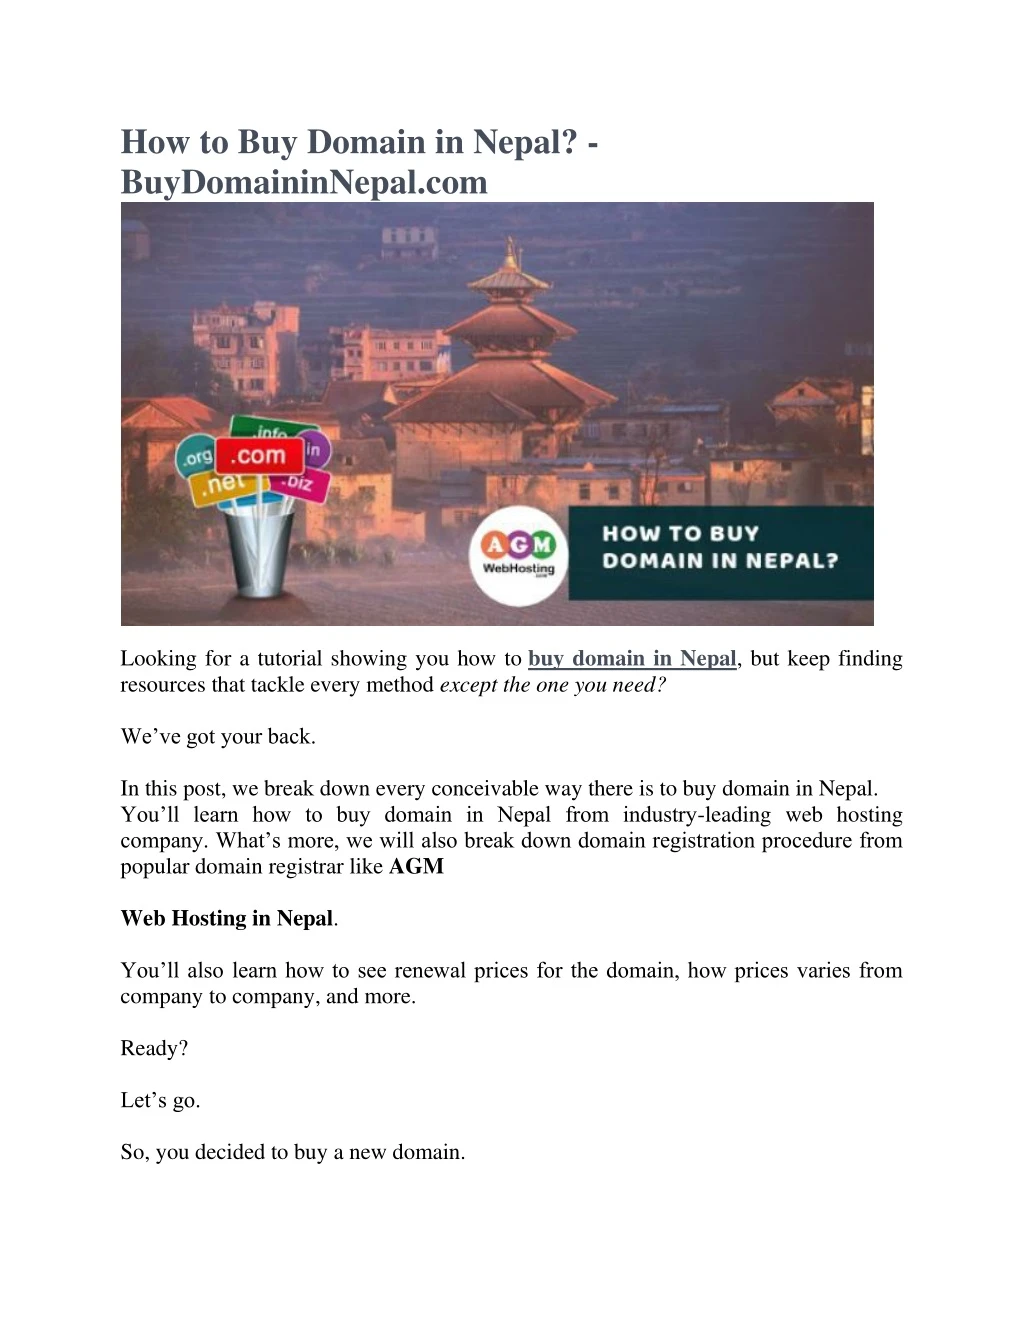 how to buy domain in nepal buydomaininnepal com